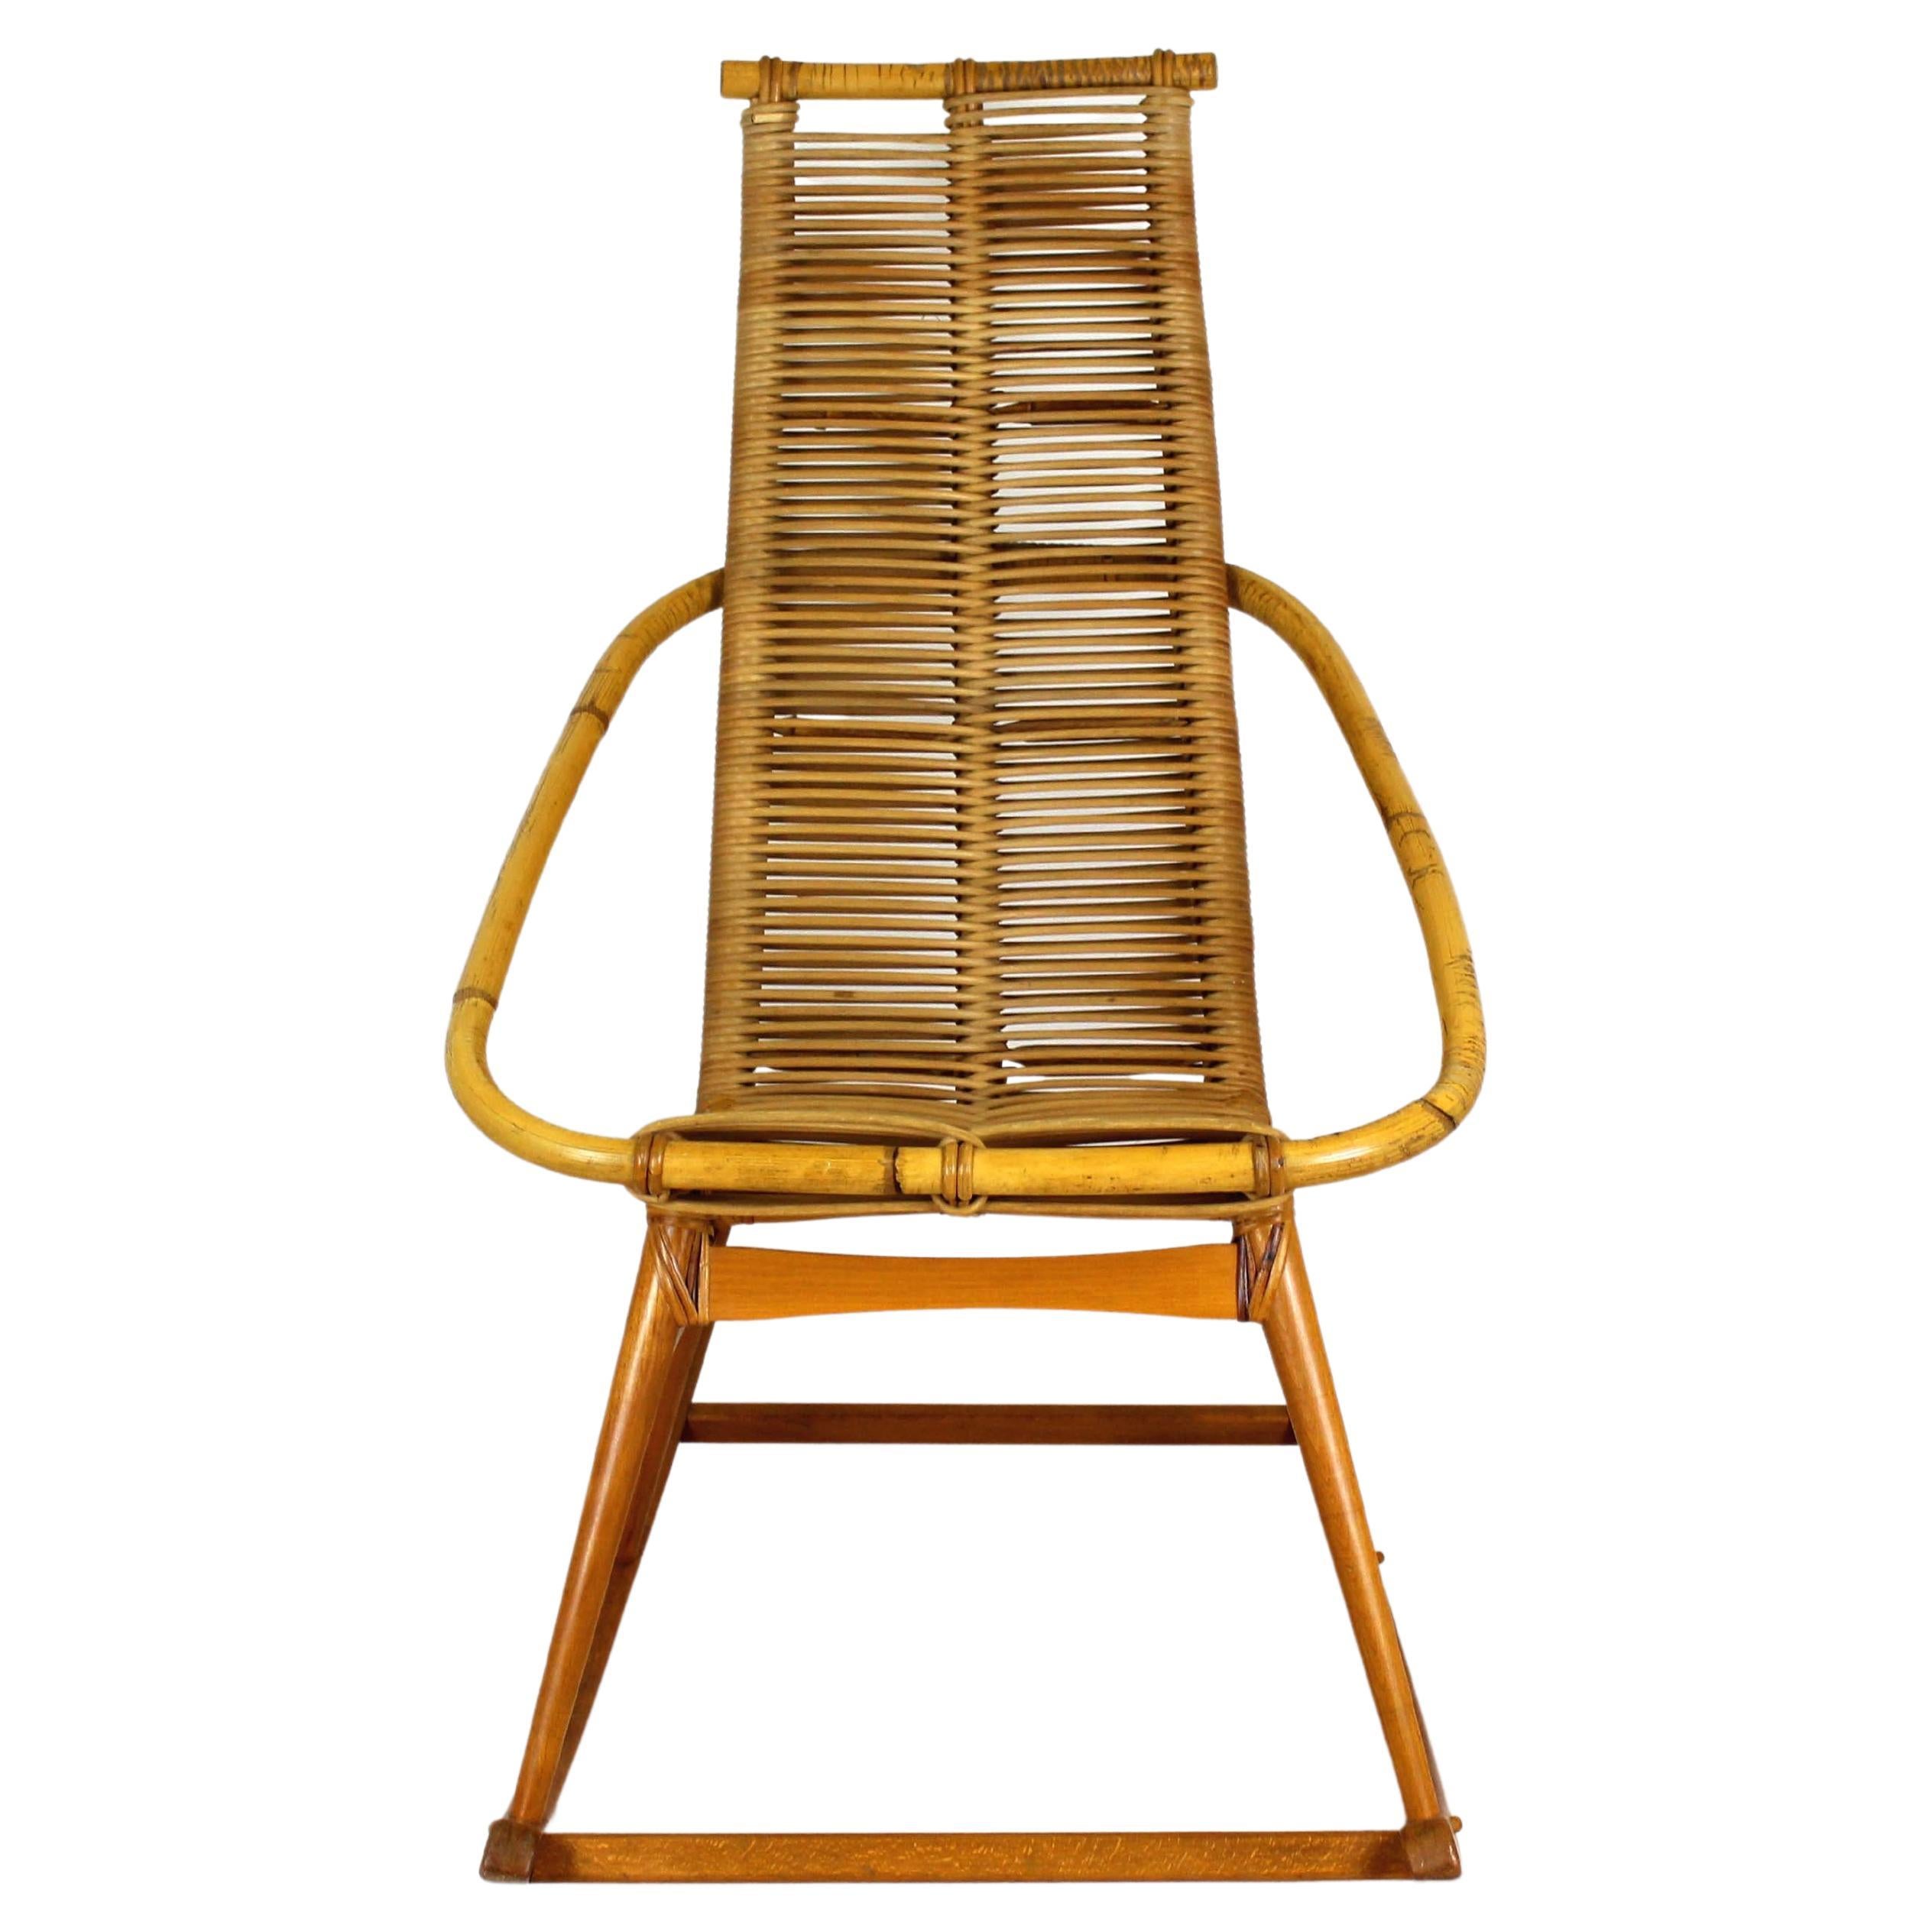 Mid-Century Rattan Rocking Chair, 1960s